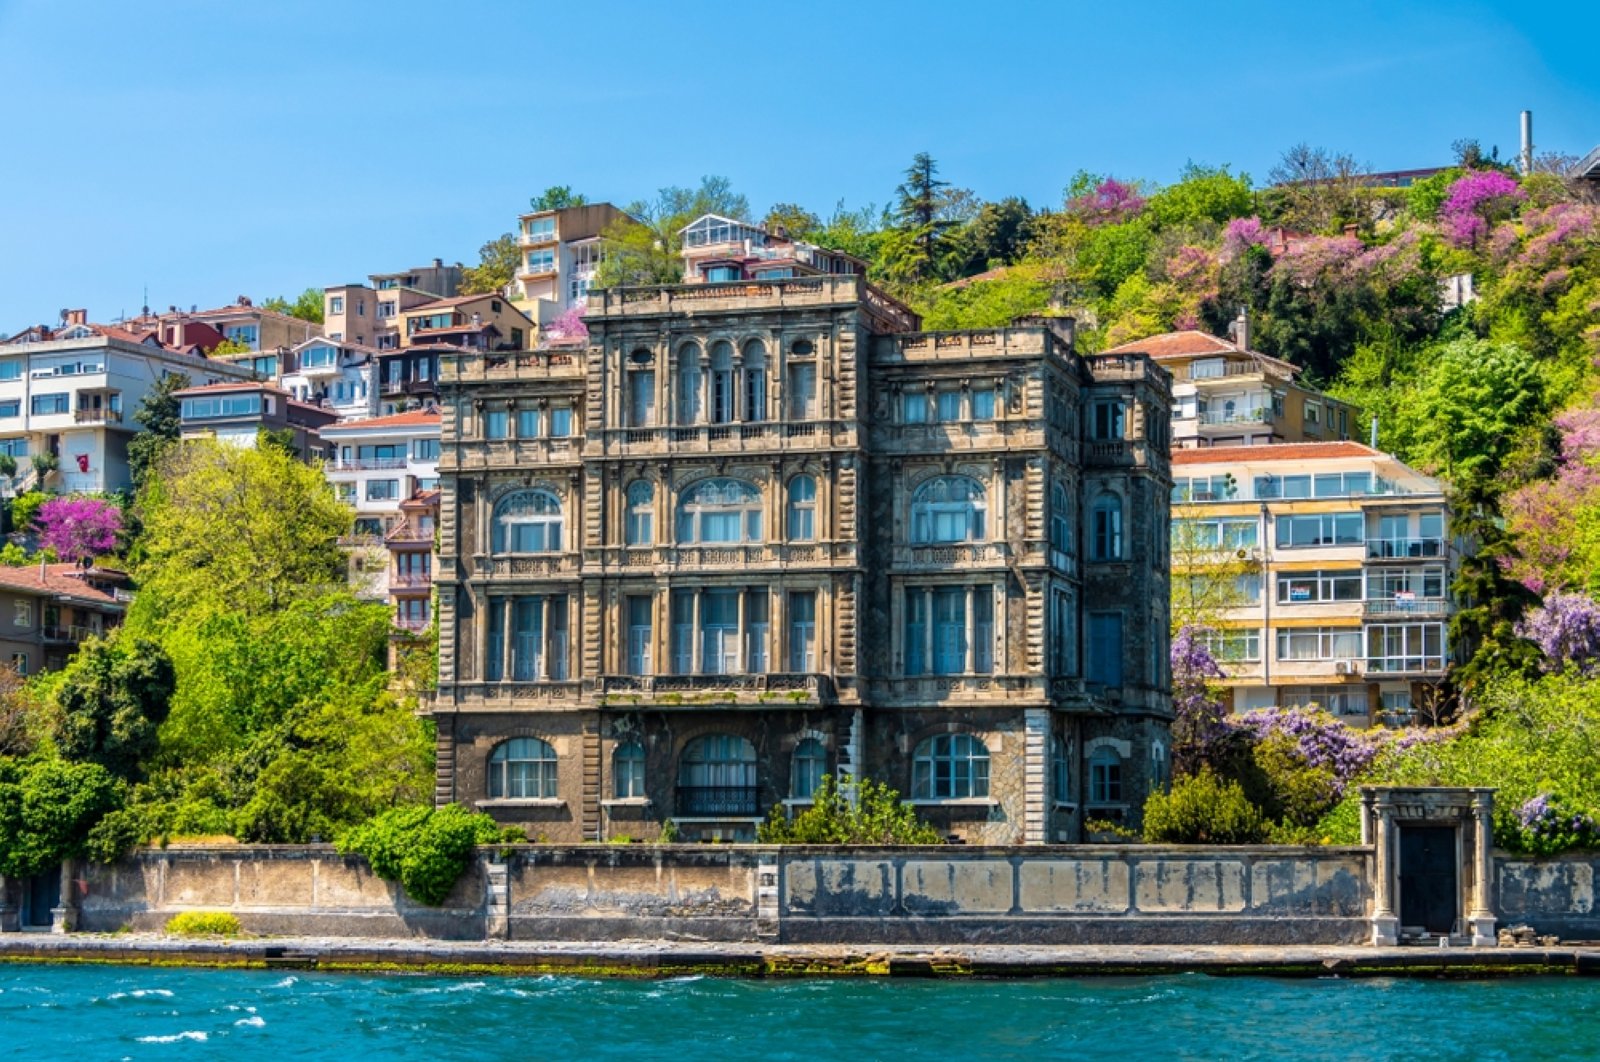 Harta karun di antara ombak: rumah-rumah bersejarah di tepi pantai Istanbul